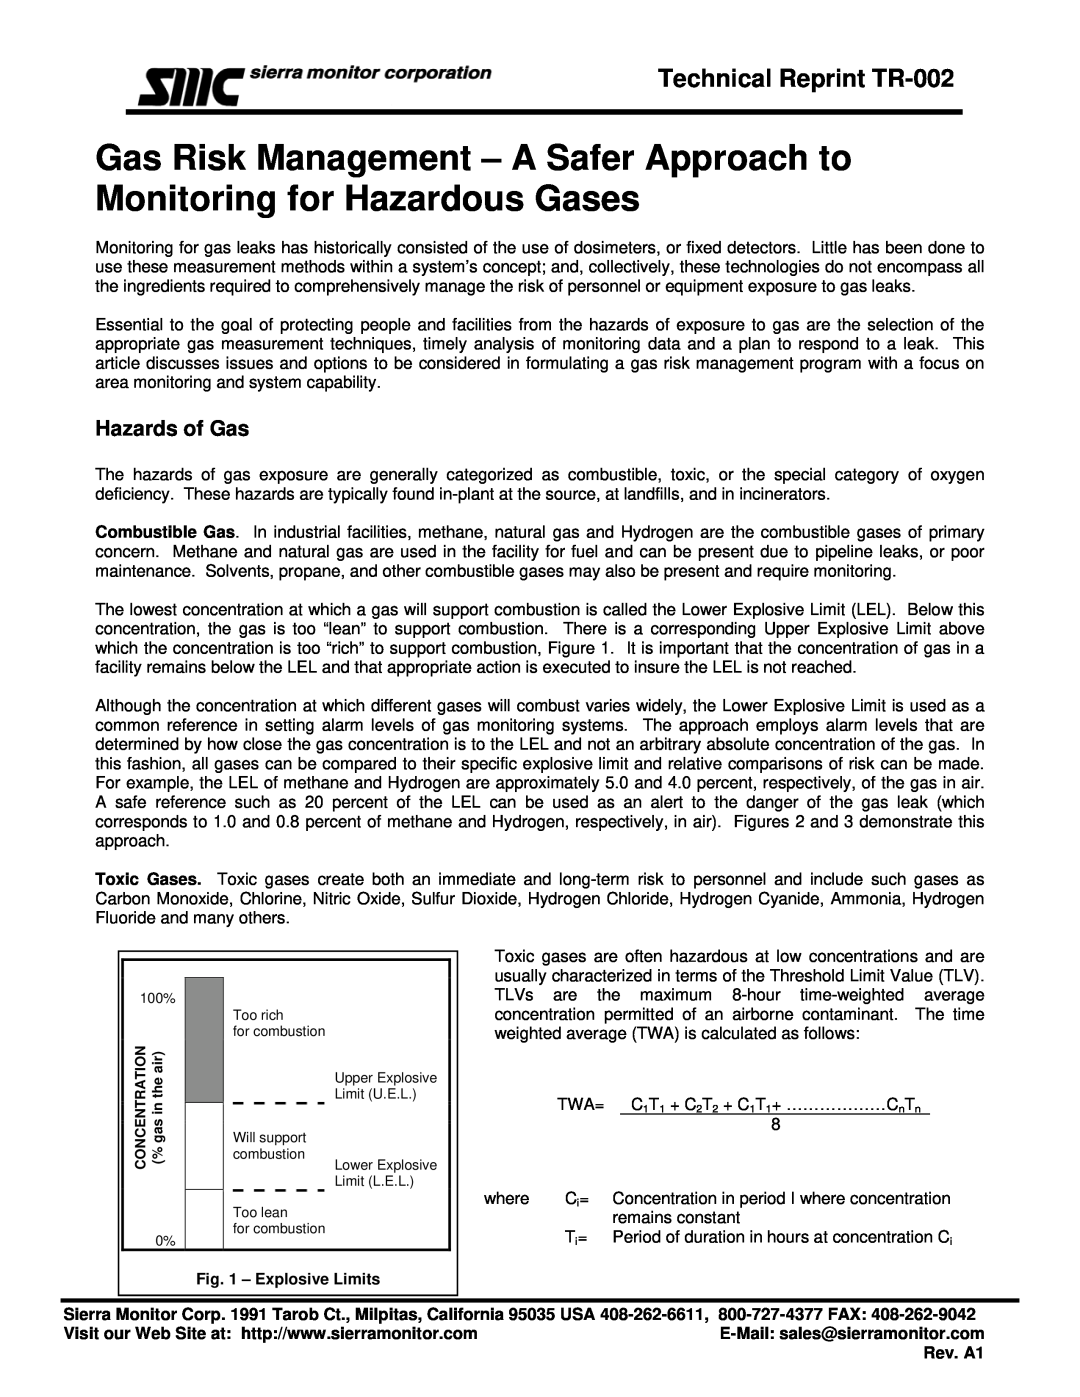 Sierra Monitor Corporation manual Technical Reprint TR-002, Hazards of Gas 